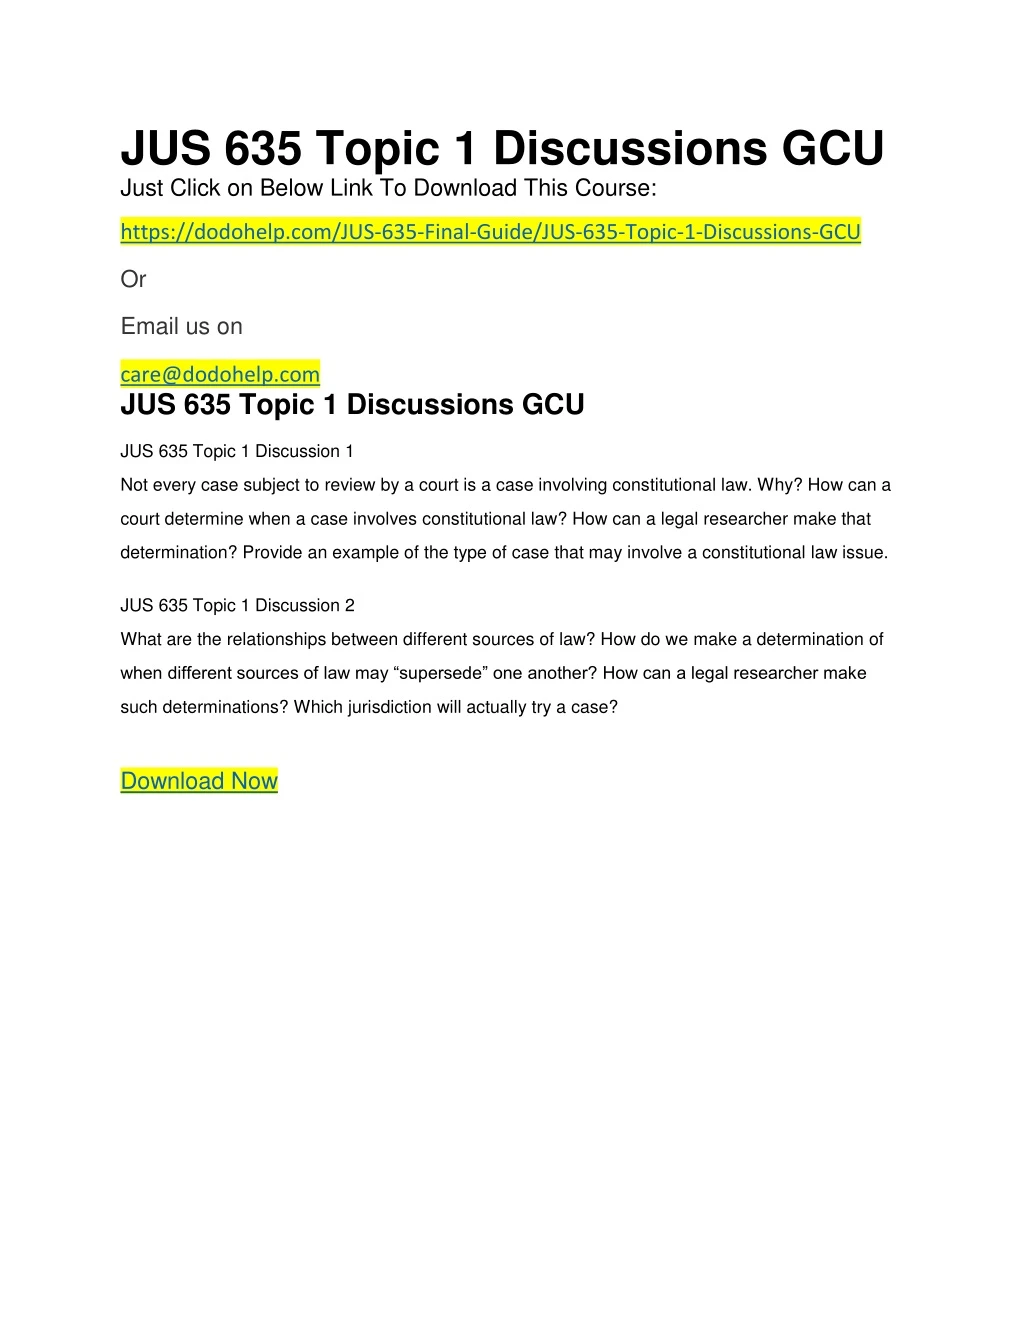 jus 635 topic 1 discussions gcu just click